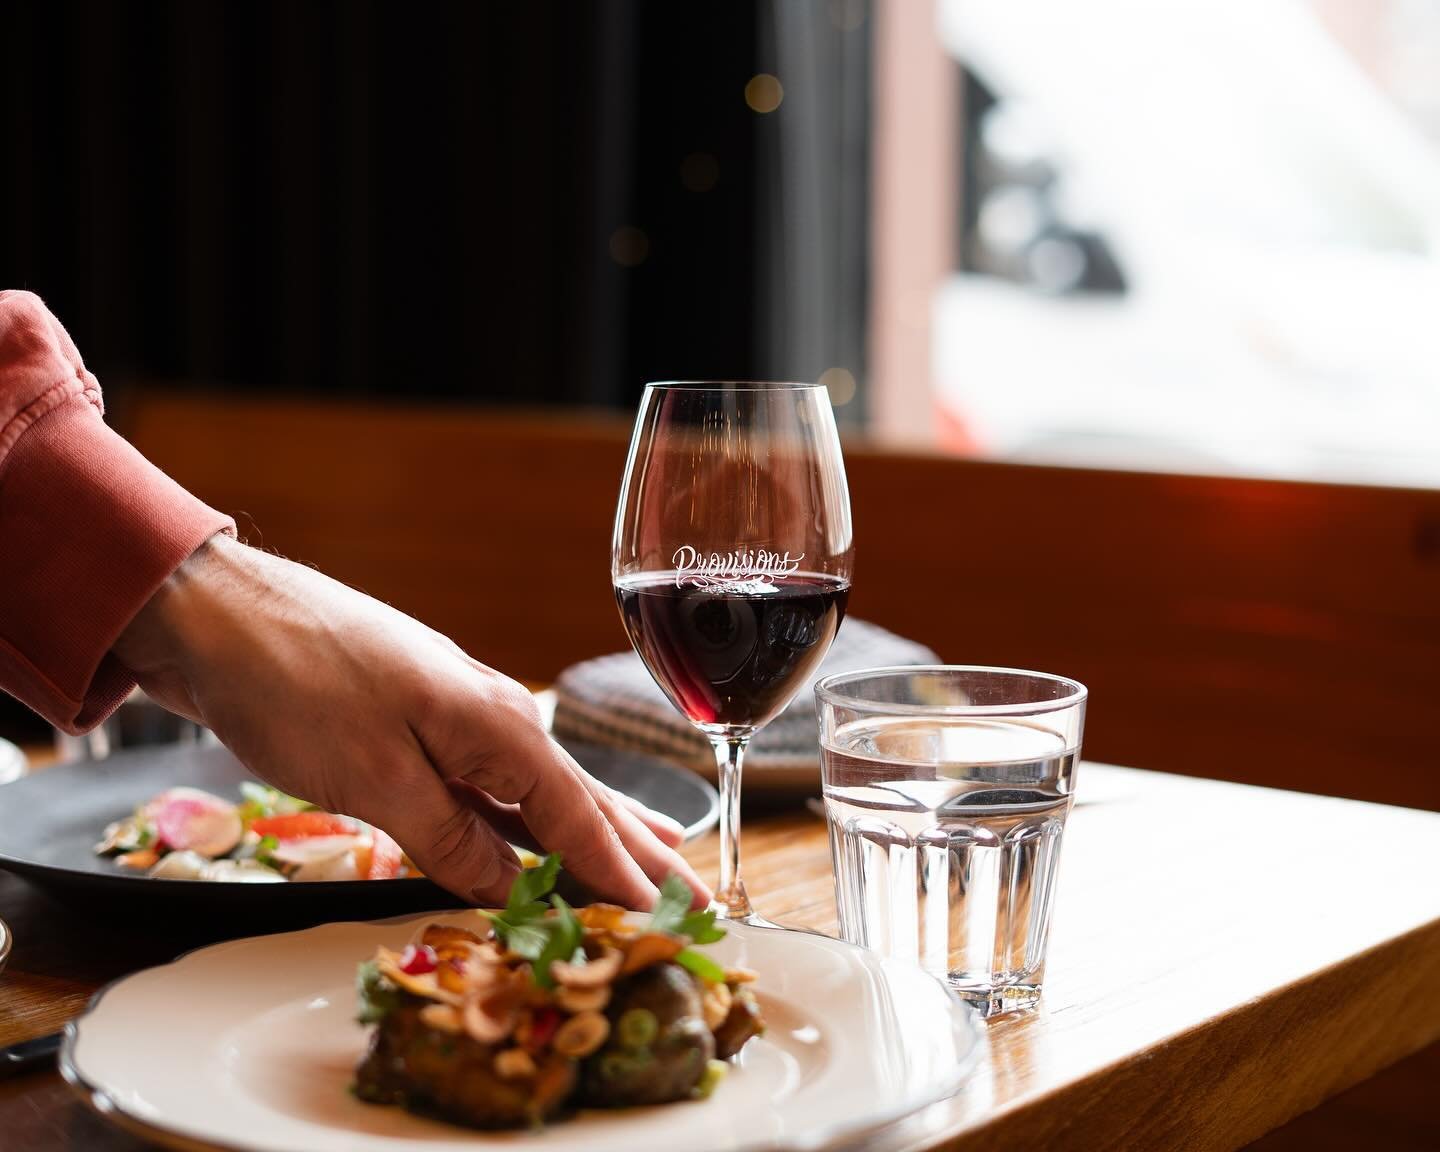 Ti&rsquo; verre de rouge avec ton repas ?

#vin #wine #winebar #baravin #restaurant